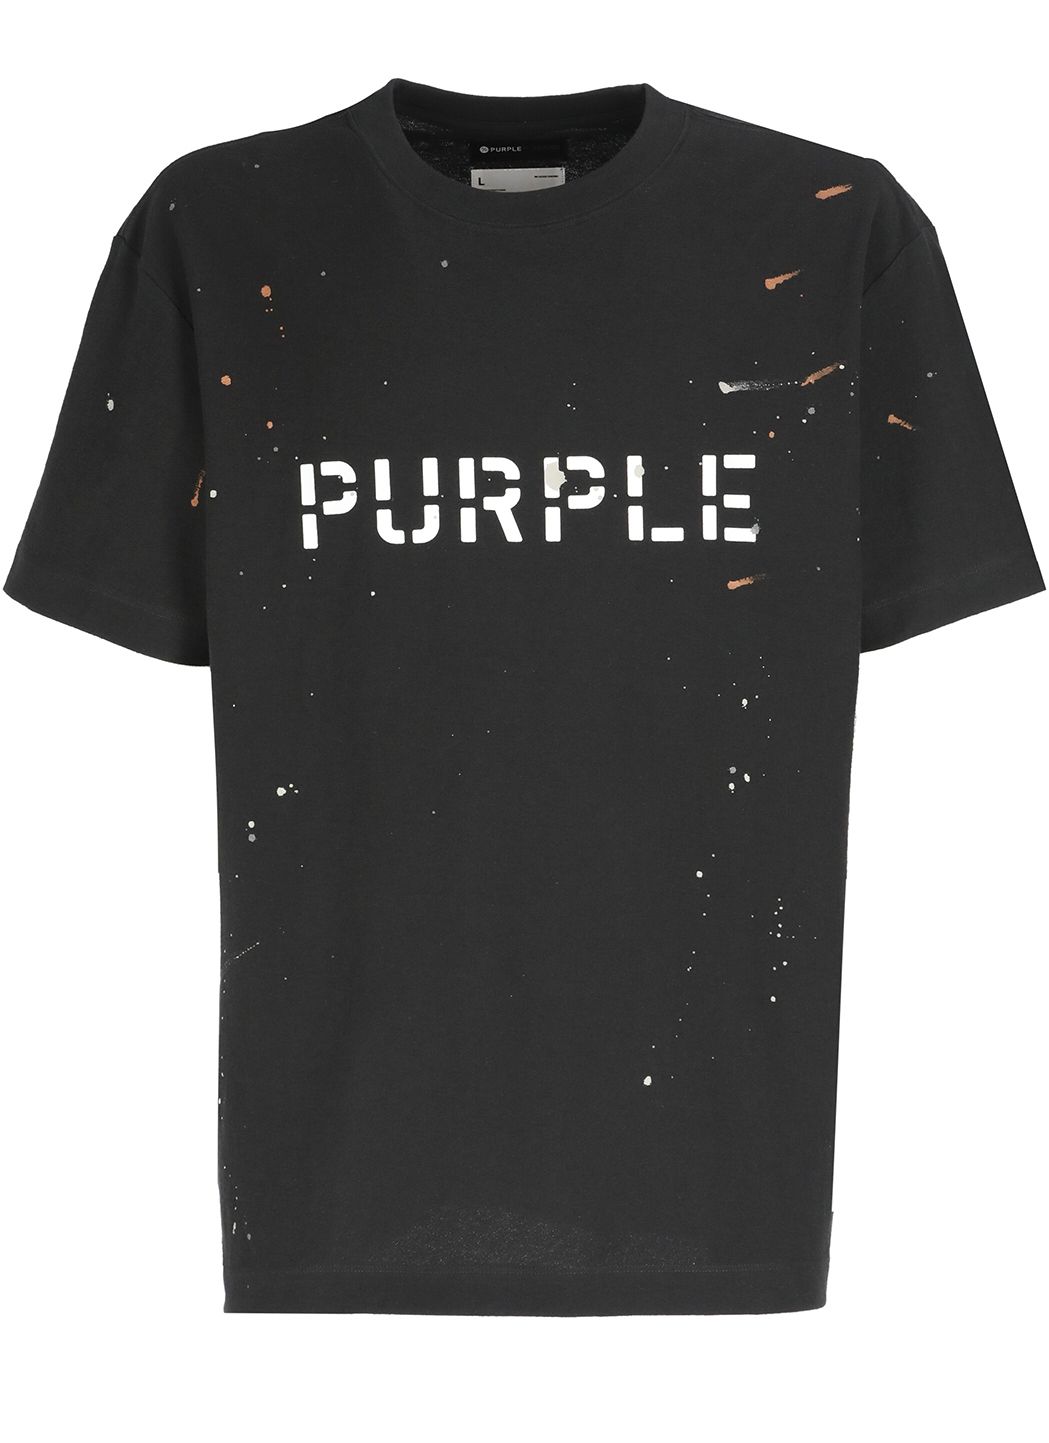 T-shirt con effetto vernice spray